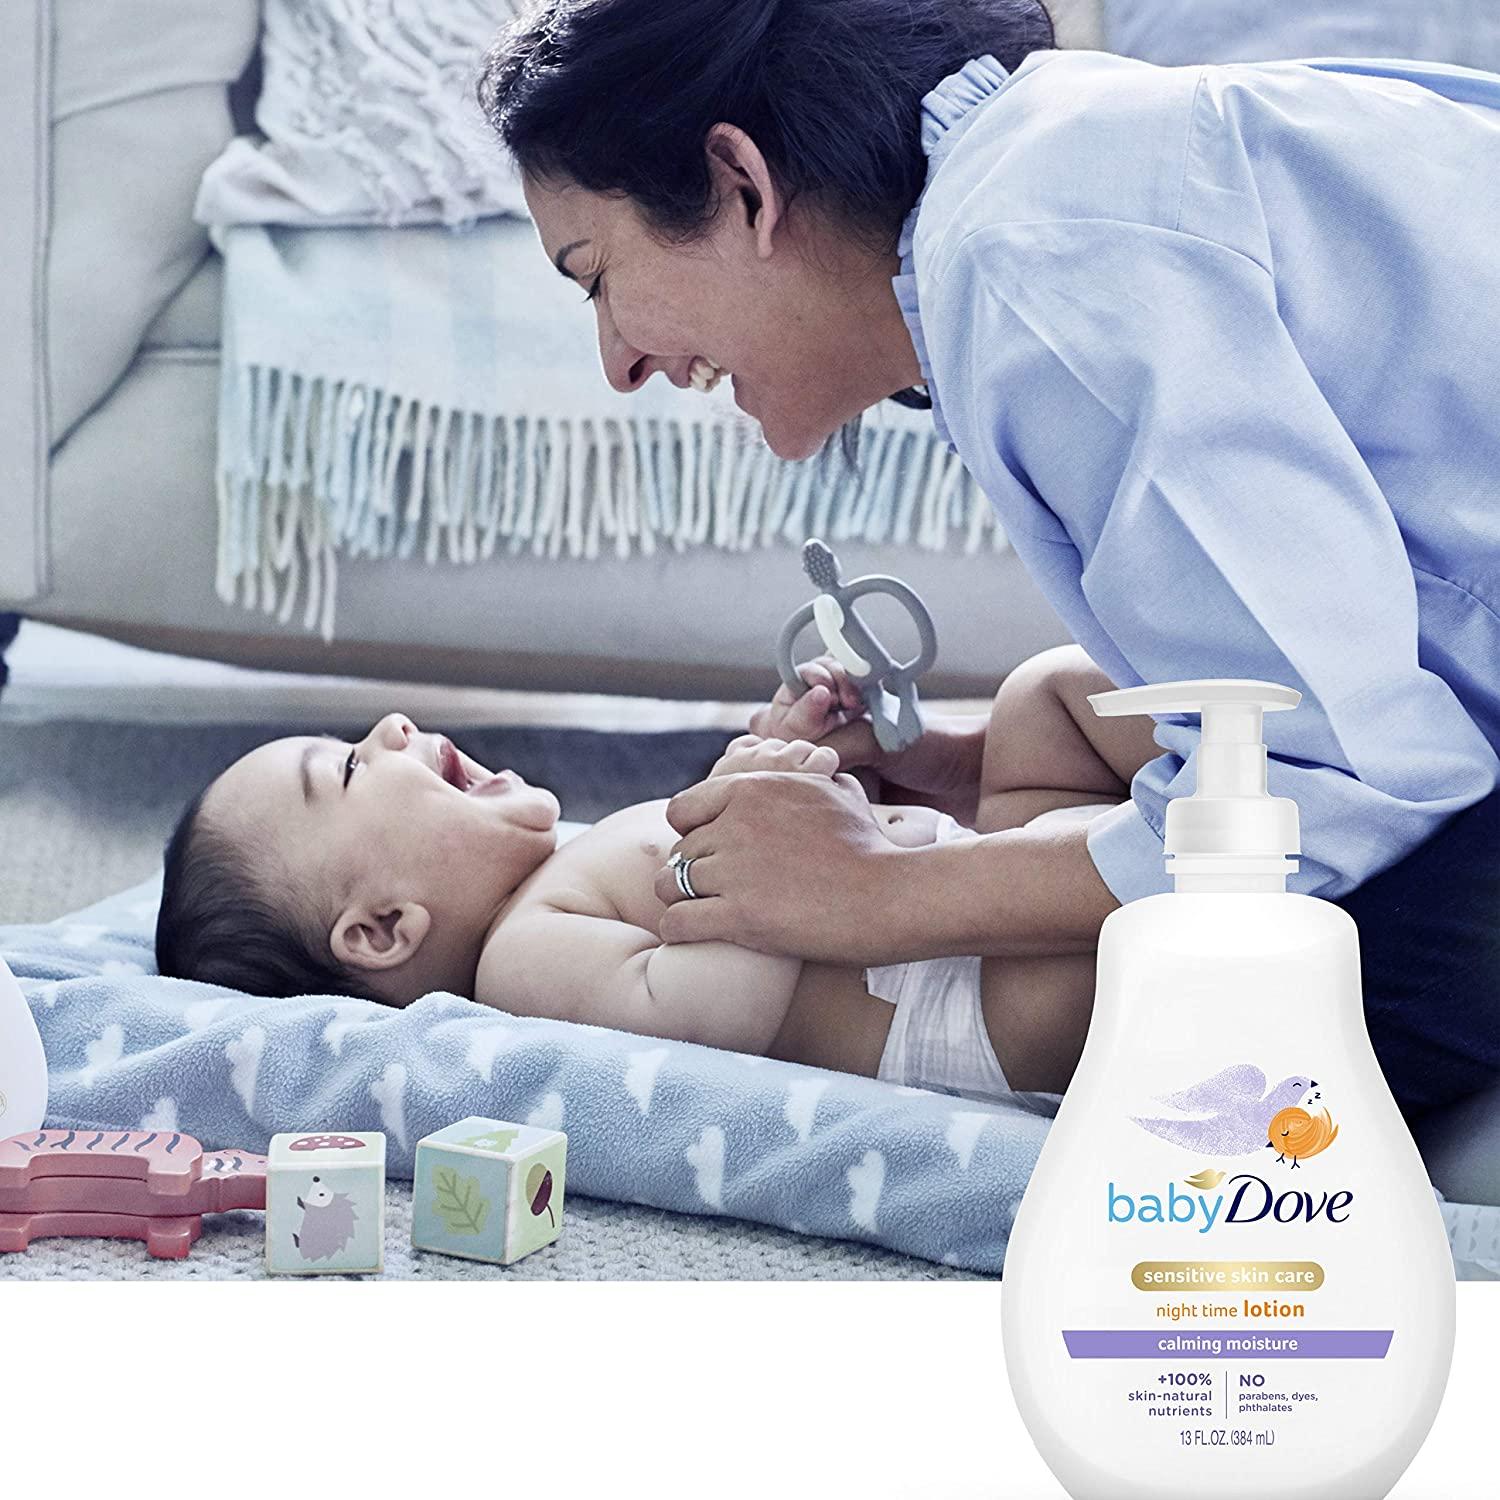 Baby, Sensitive Skin Care, Night Time Wash, Calming Moisture, 13 fl oz (384  ml)